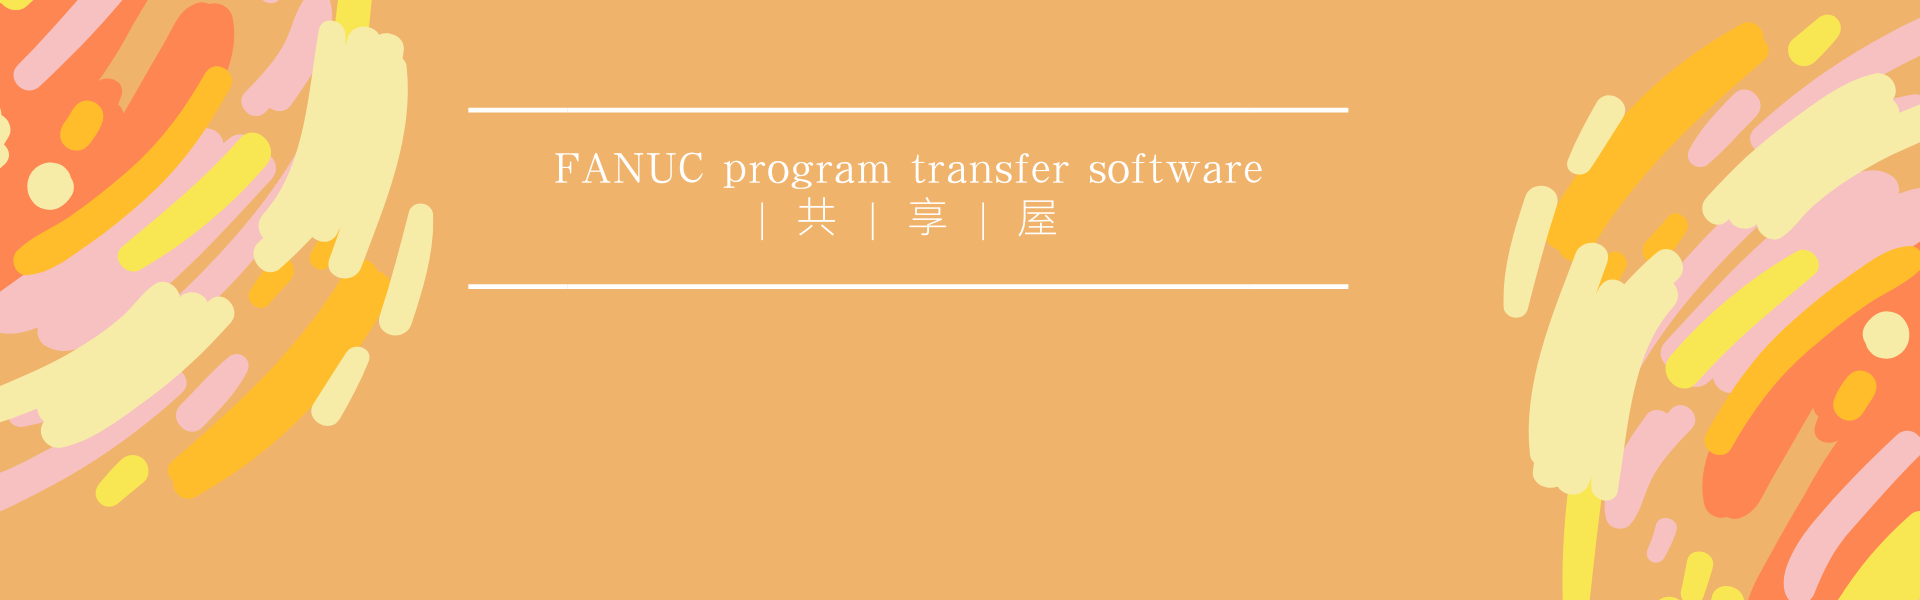 FANUC Program Transfer Software A08B_9510_J515_V16.0 Is Installed On The Registration - FANUC CNC-FANUC CNC